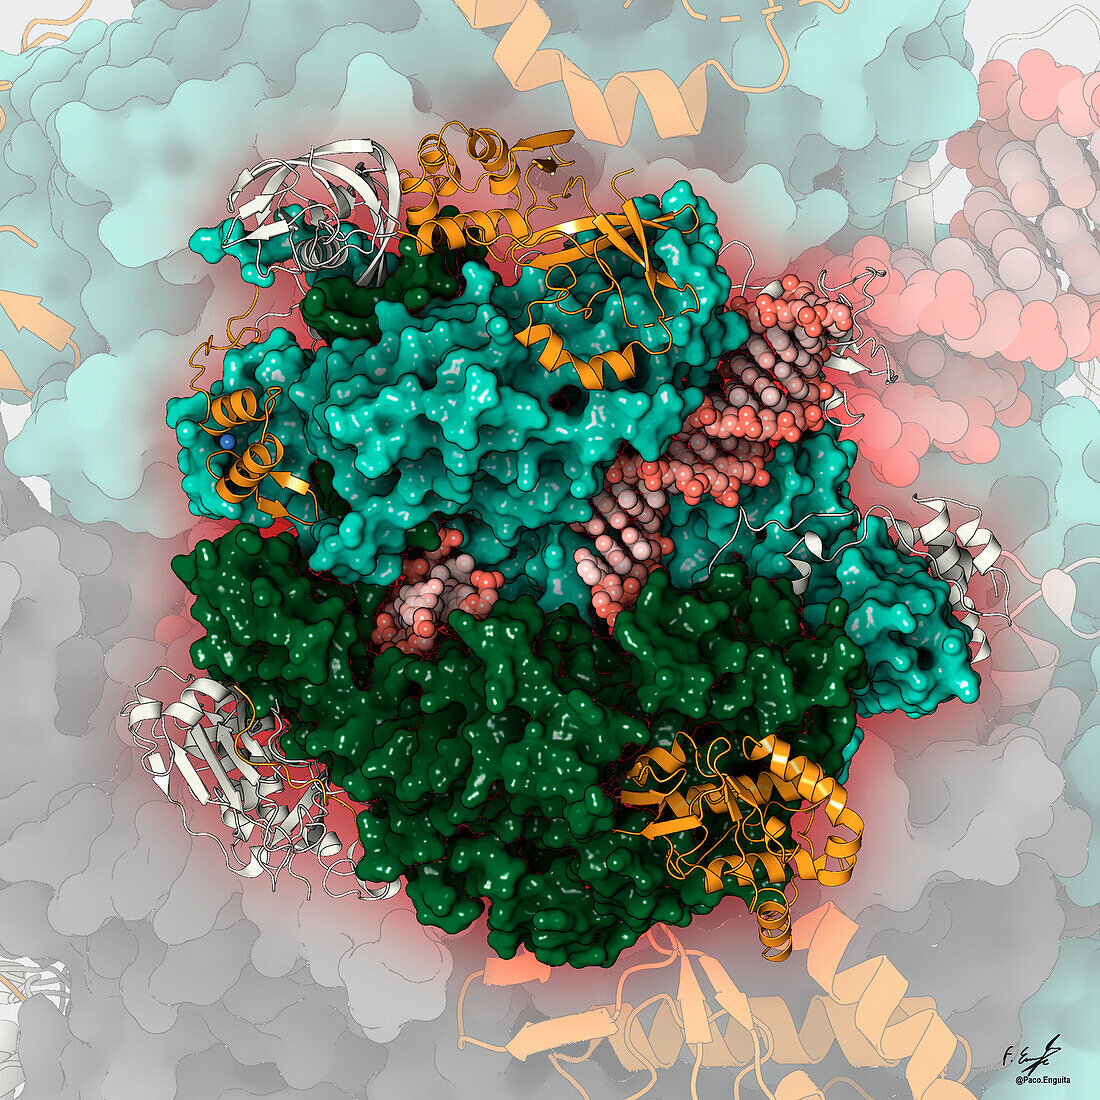 Poxvirus transcription initiation complex, illustration